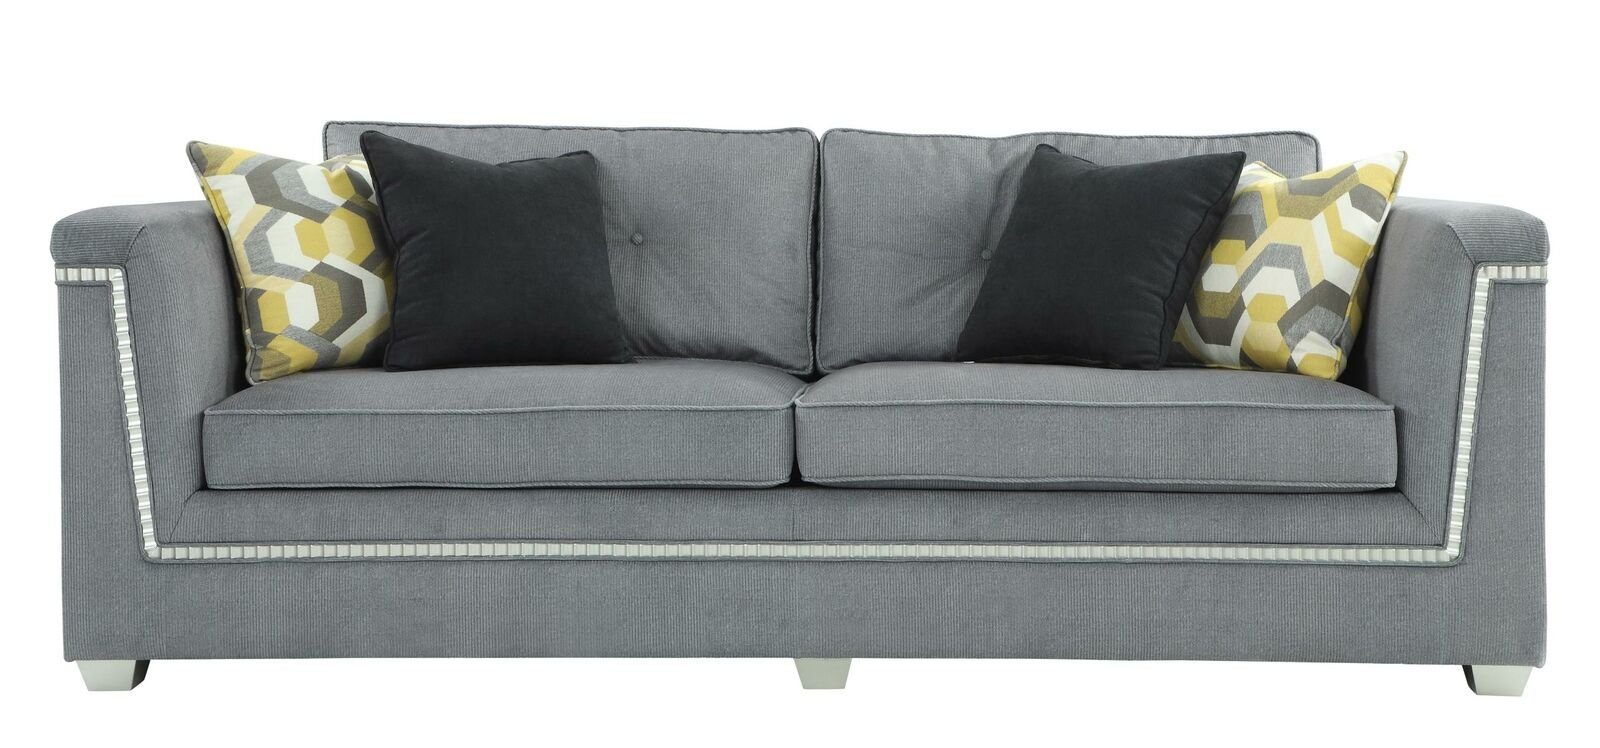 JVmoebel Sofa Moderne Graue Sofagarnitur 3+2 Sitzer Luxus Polster Couchen Neu, Made in Europe